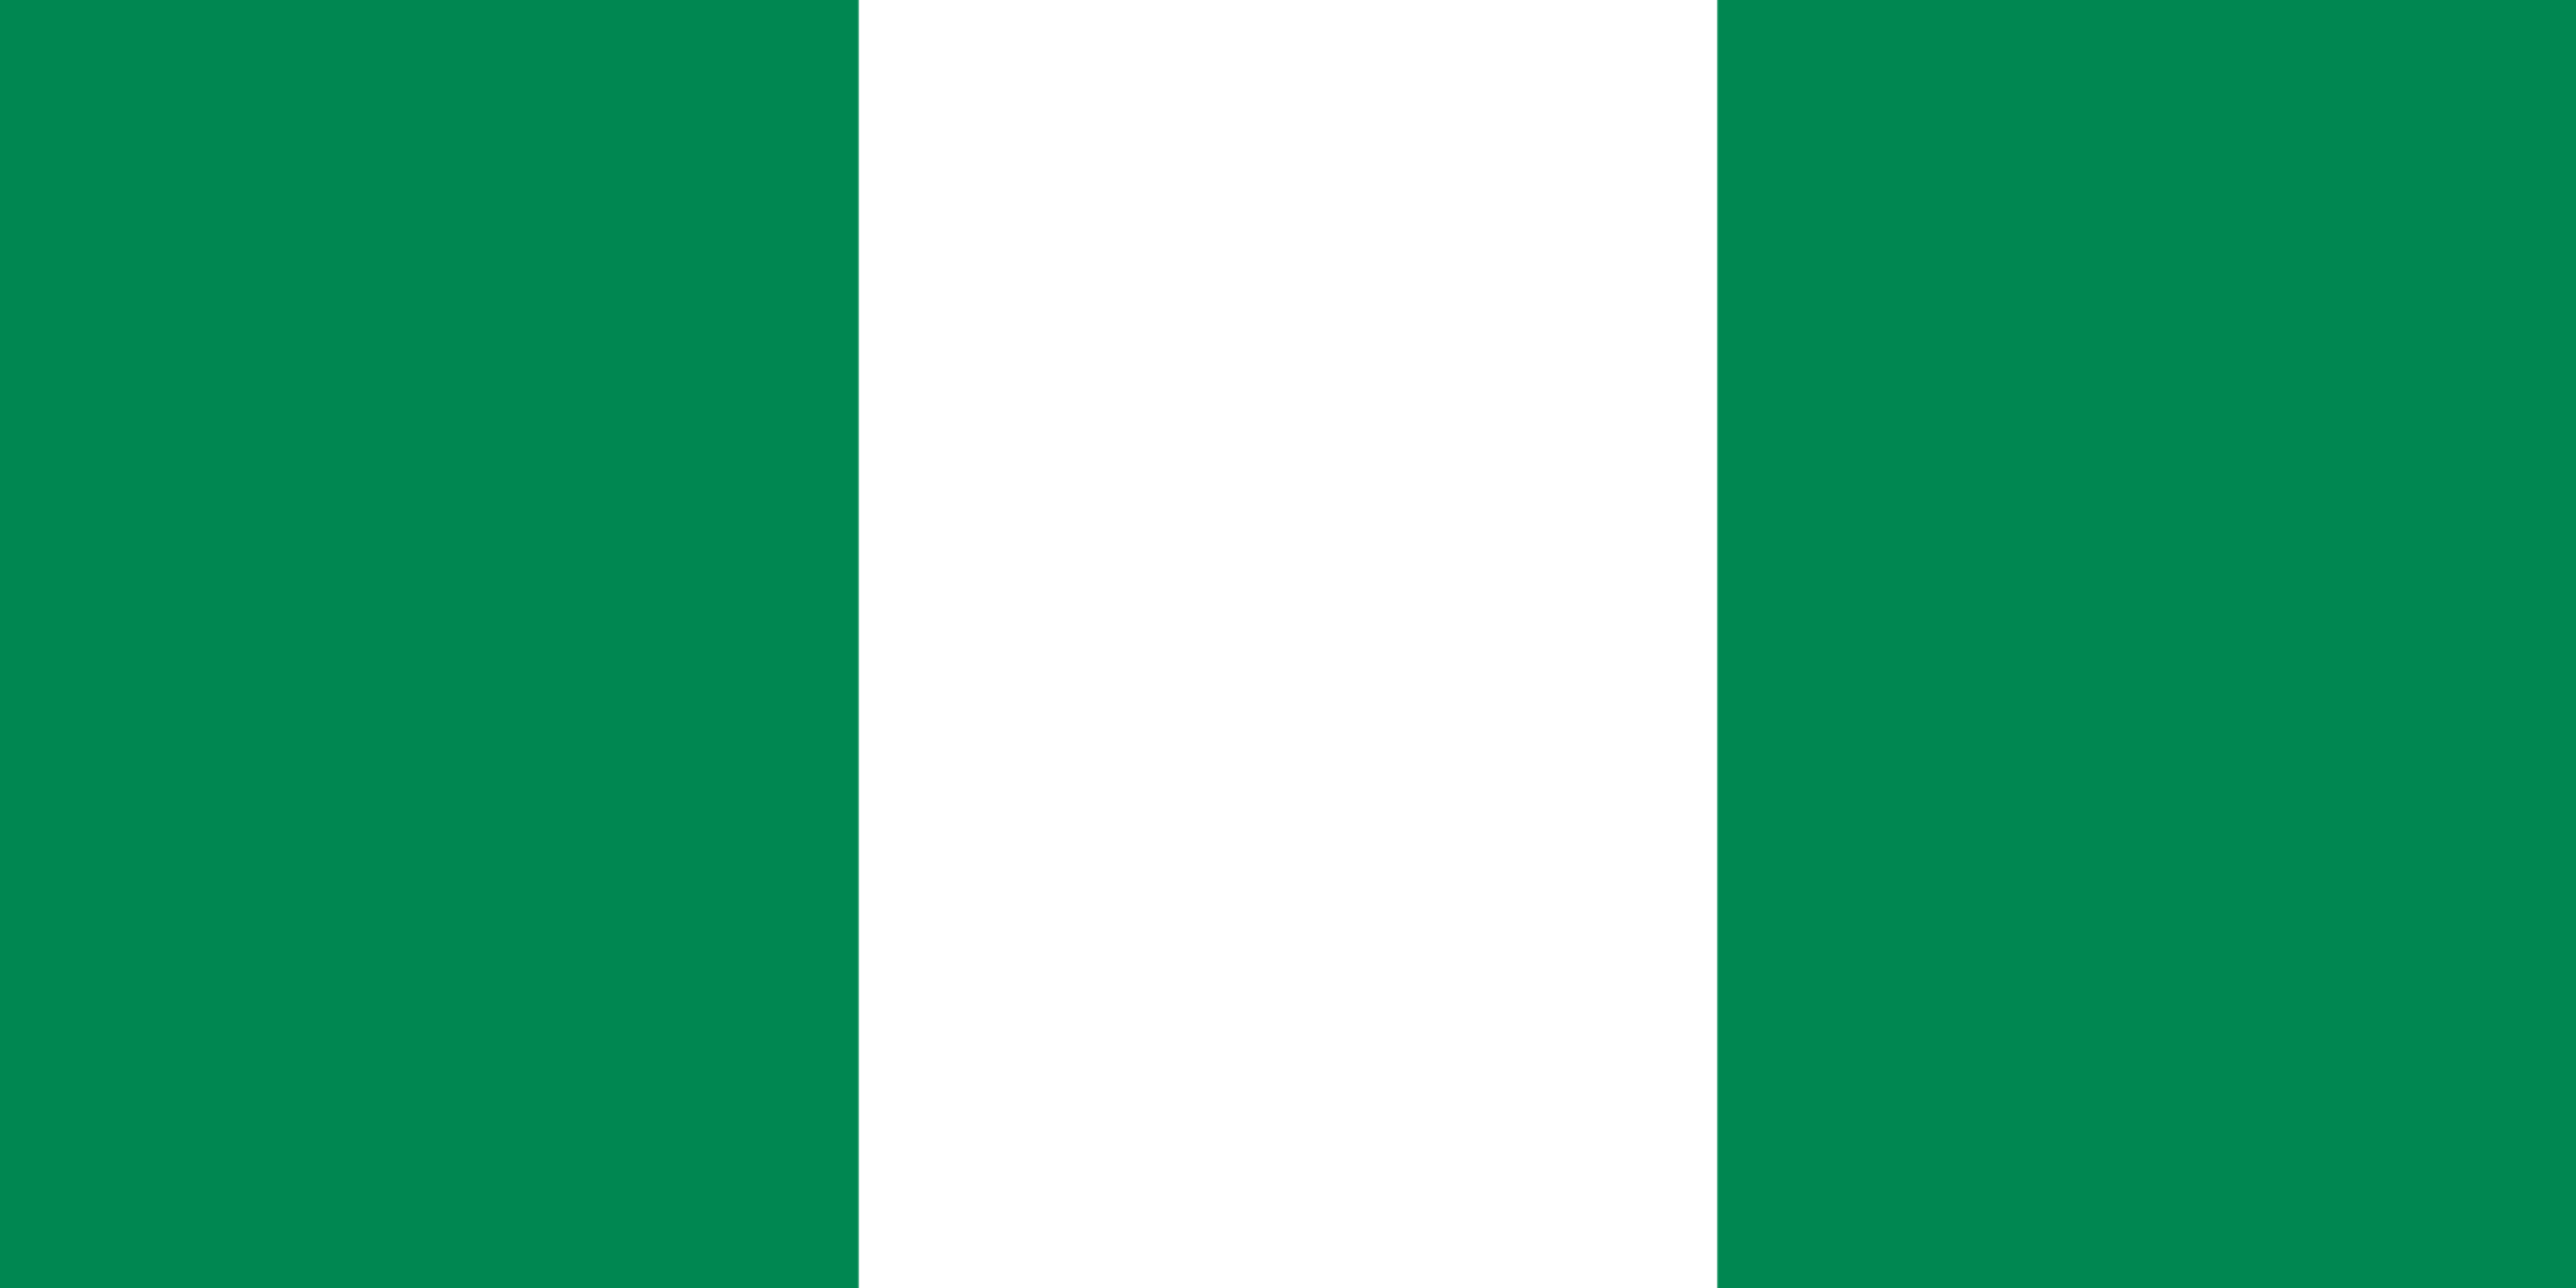 nigeria flag template